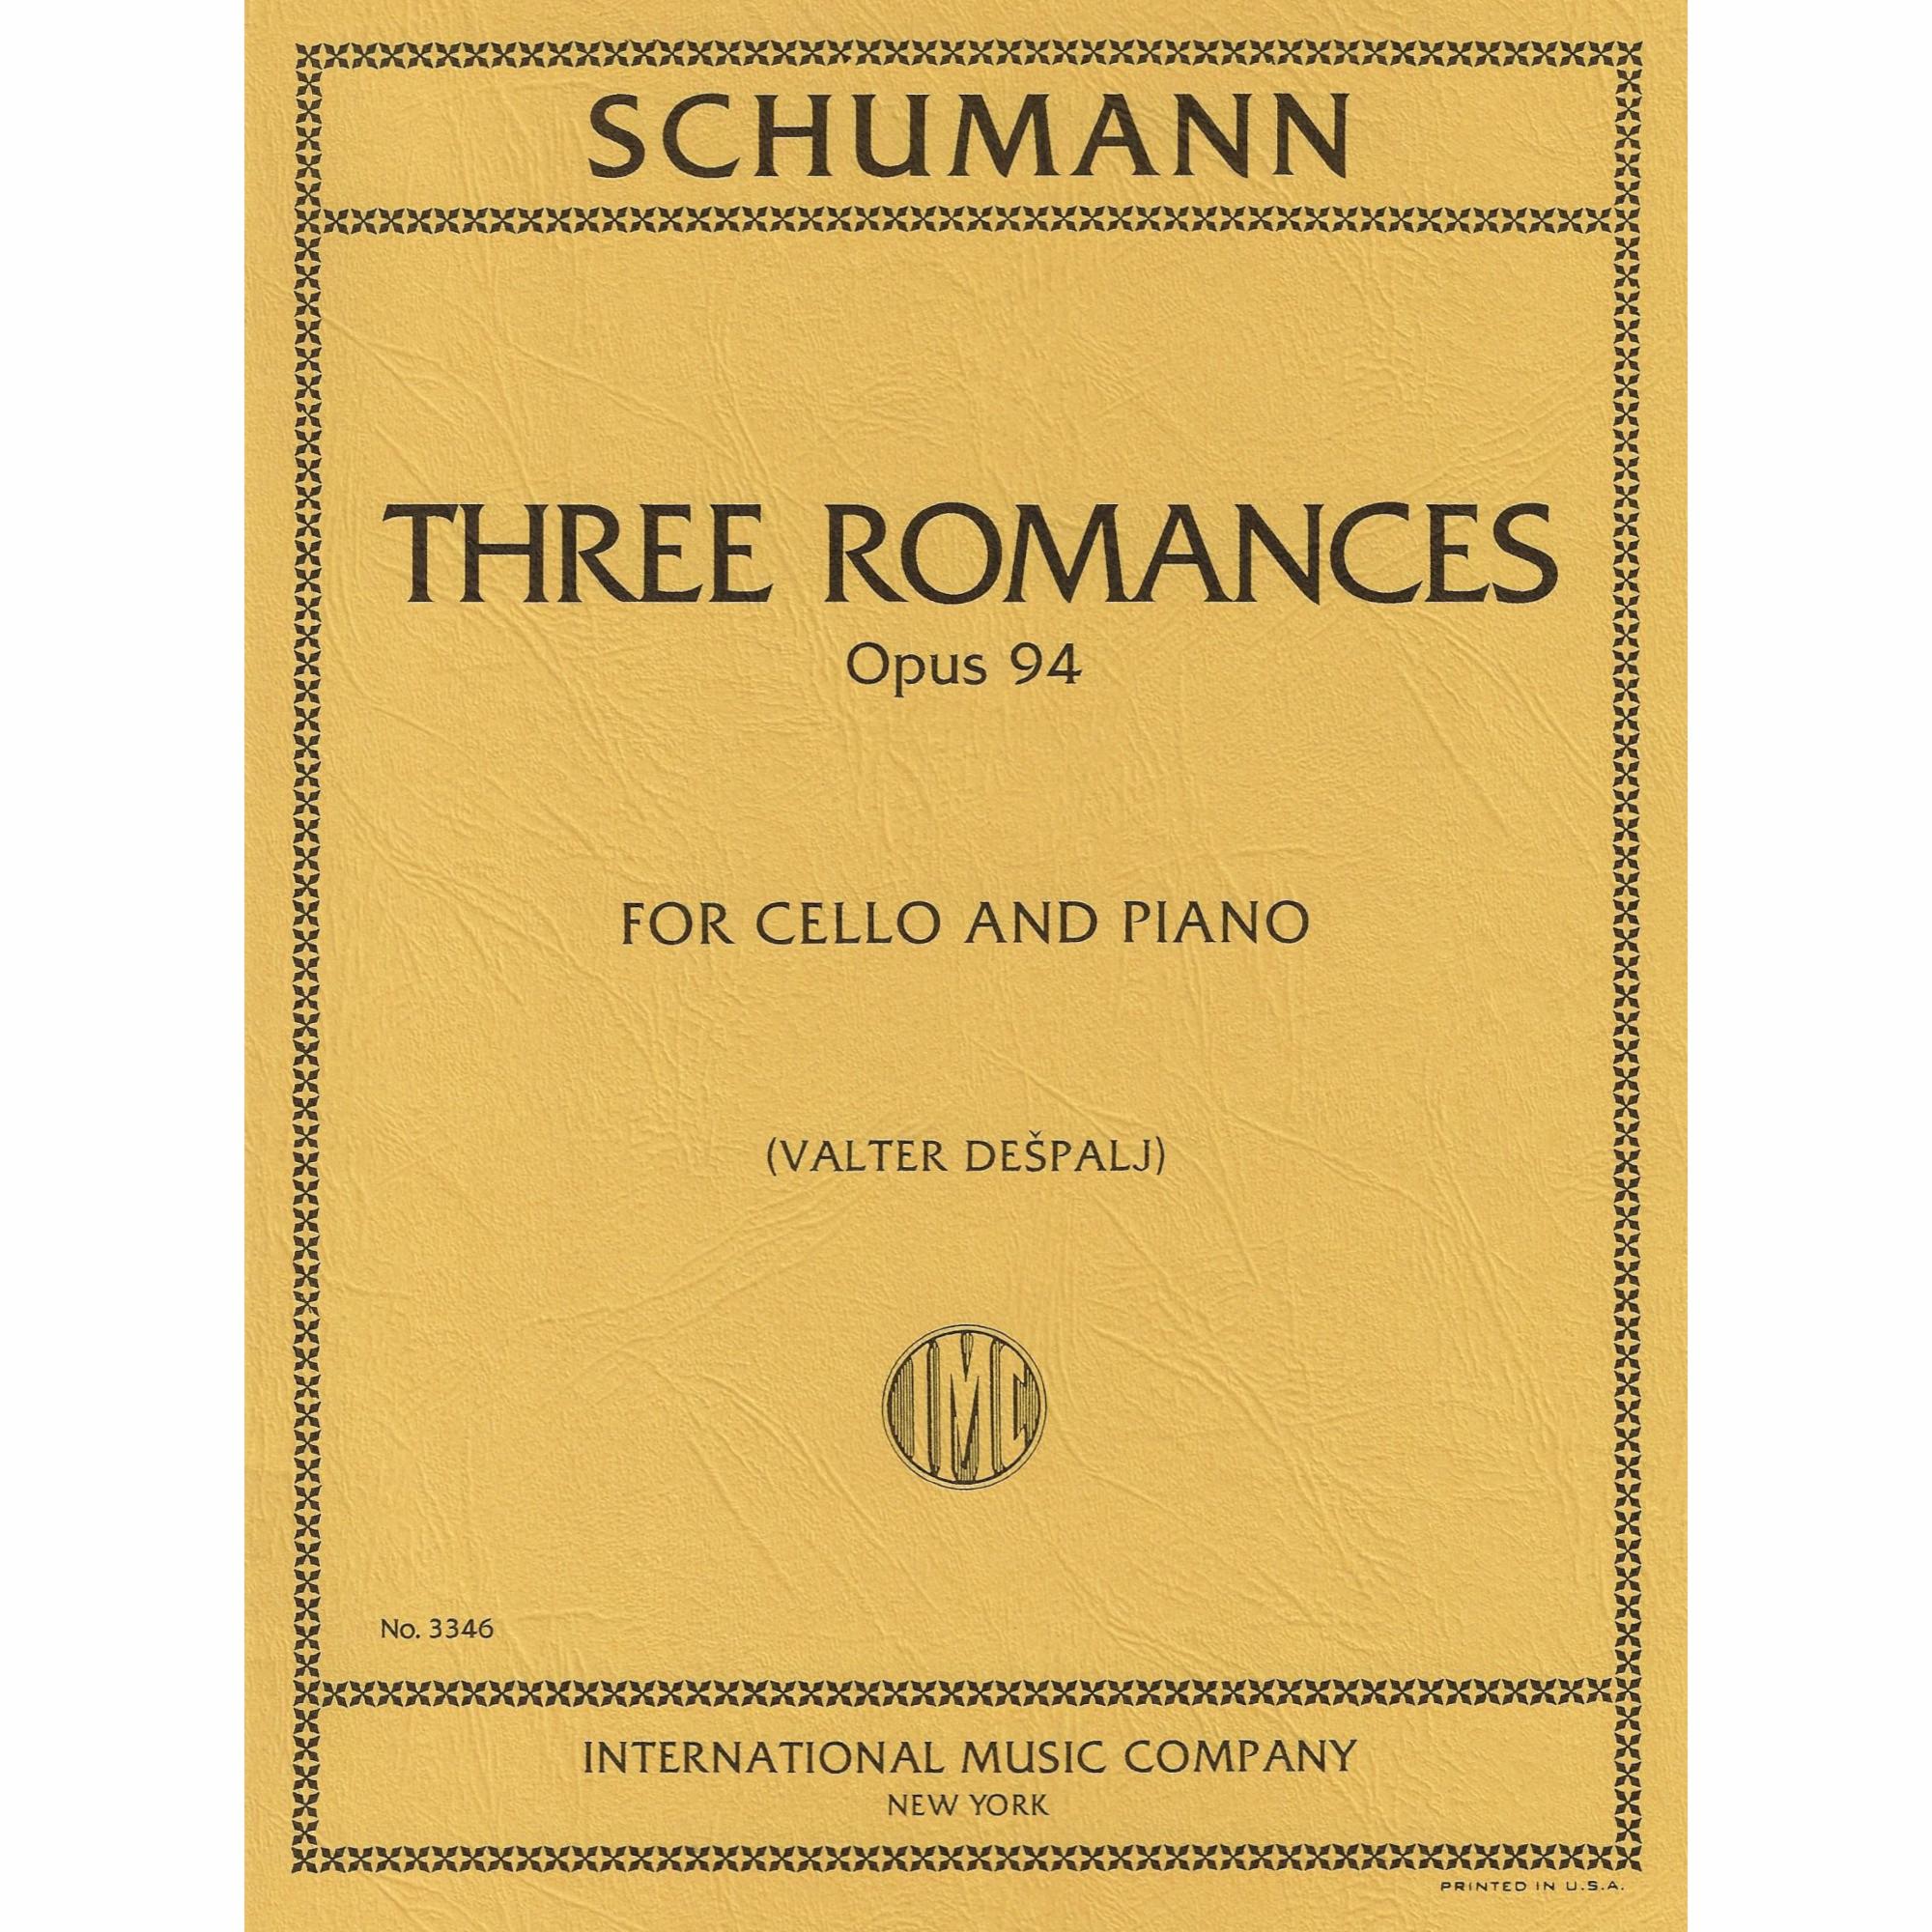 Three Romances, Op. 94 for Cello and Piano